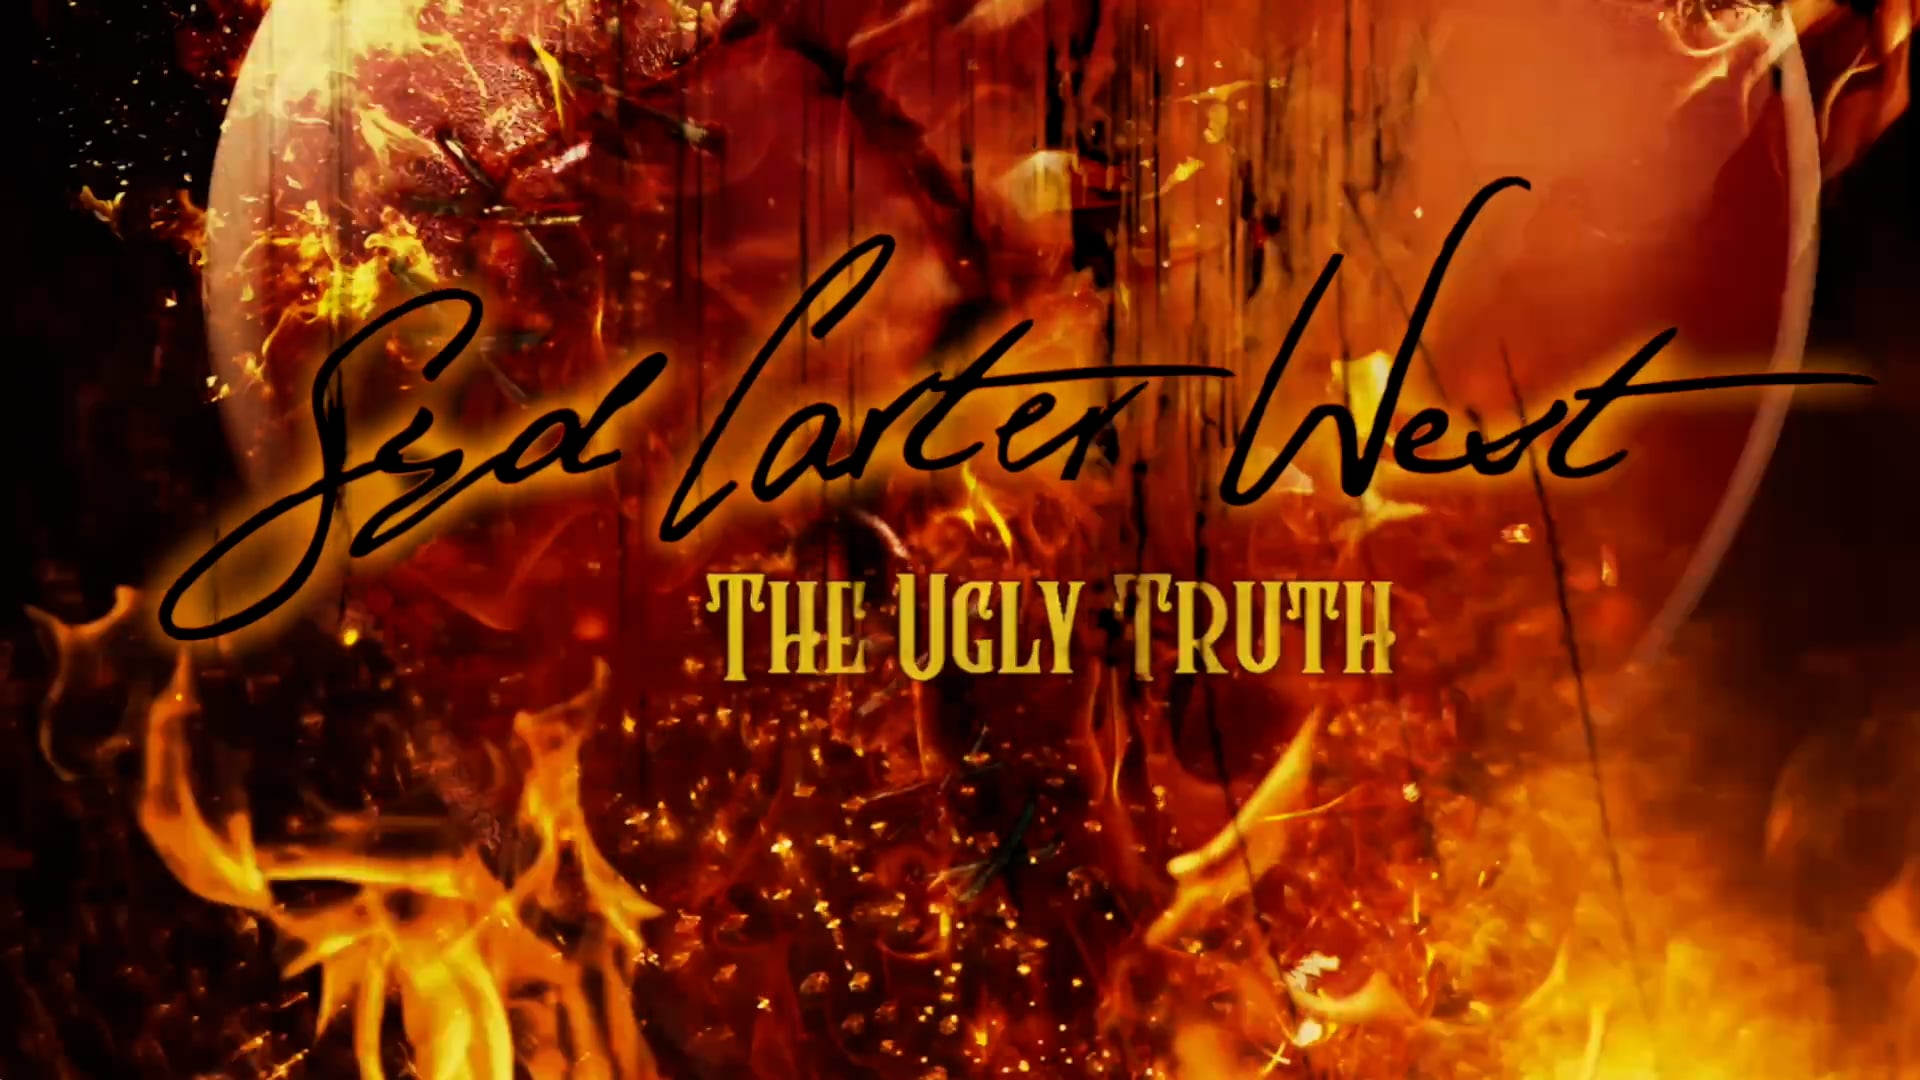 Blue Cafe Music-The Ugly Truth
Syd Carter West.m4v